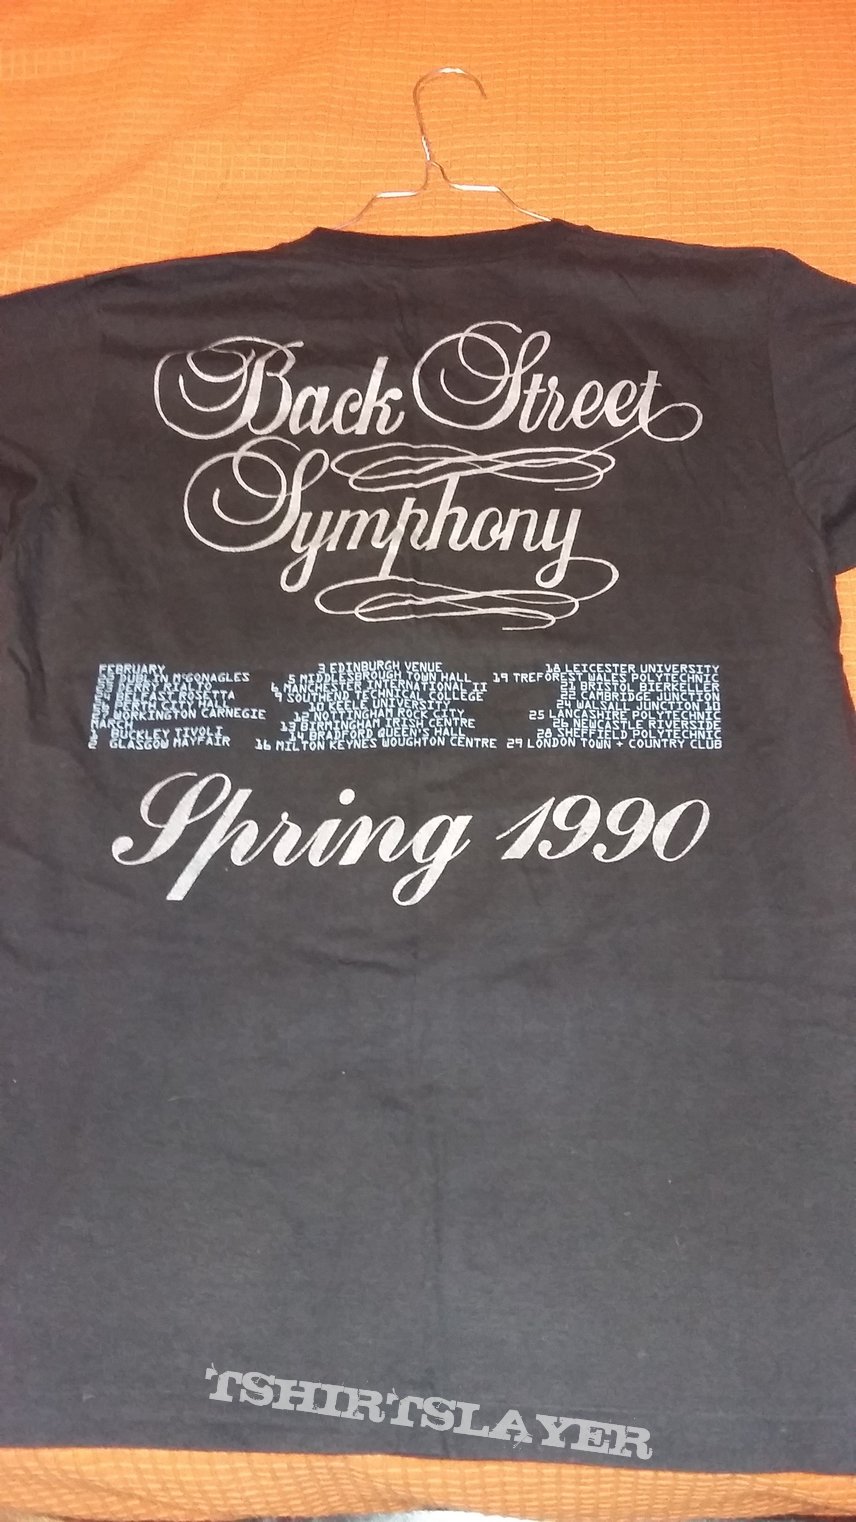 Thunder - Backstreet Symphony Spring Tour 1990 shirt